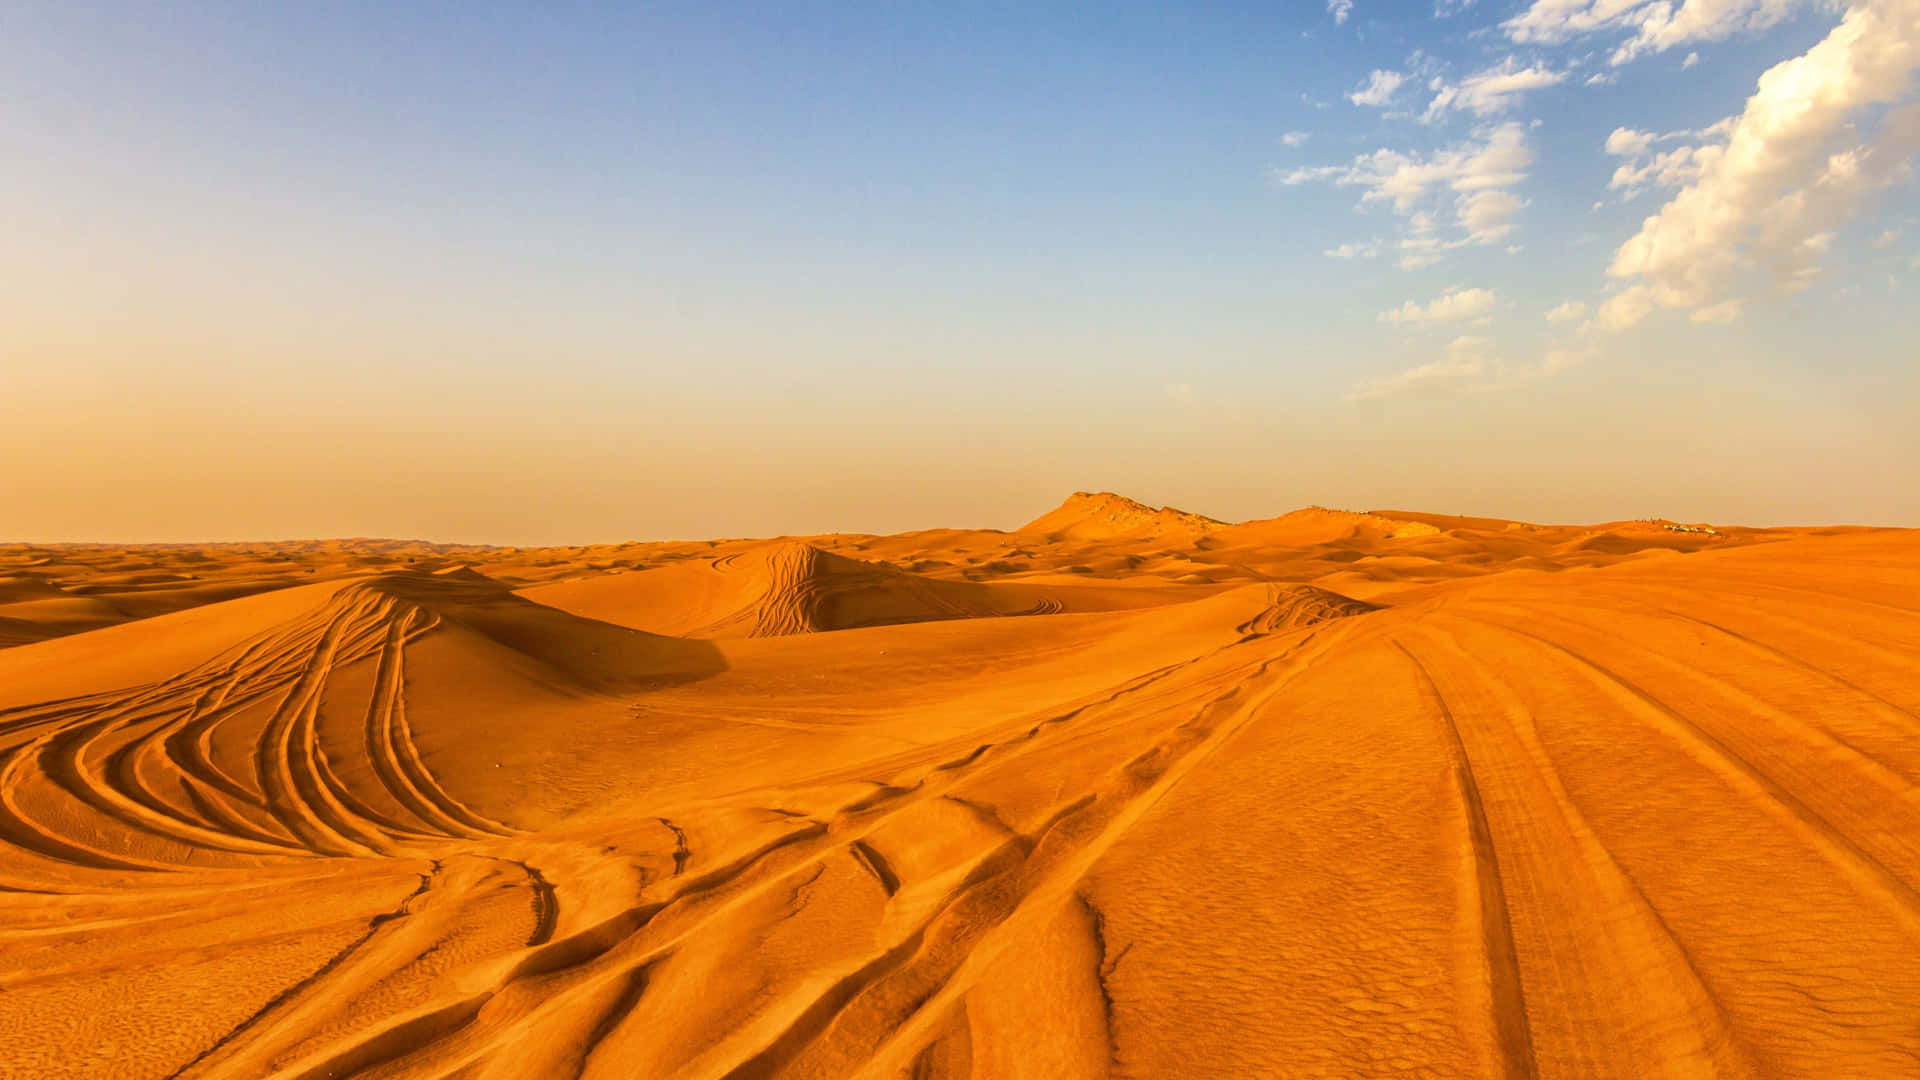 The vast desert skyline of the United Arab Emirates